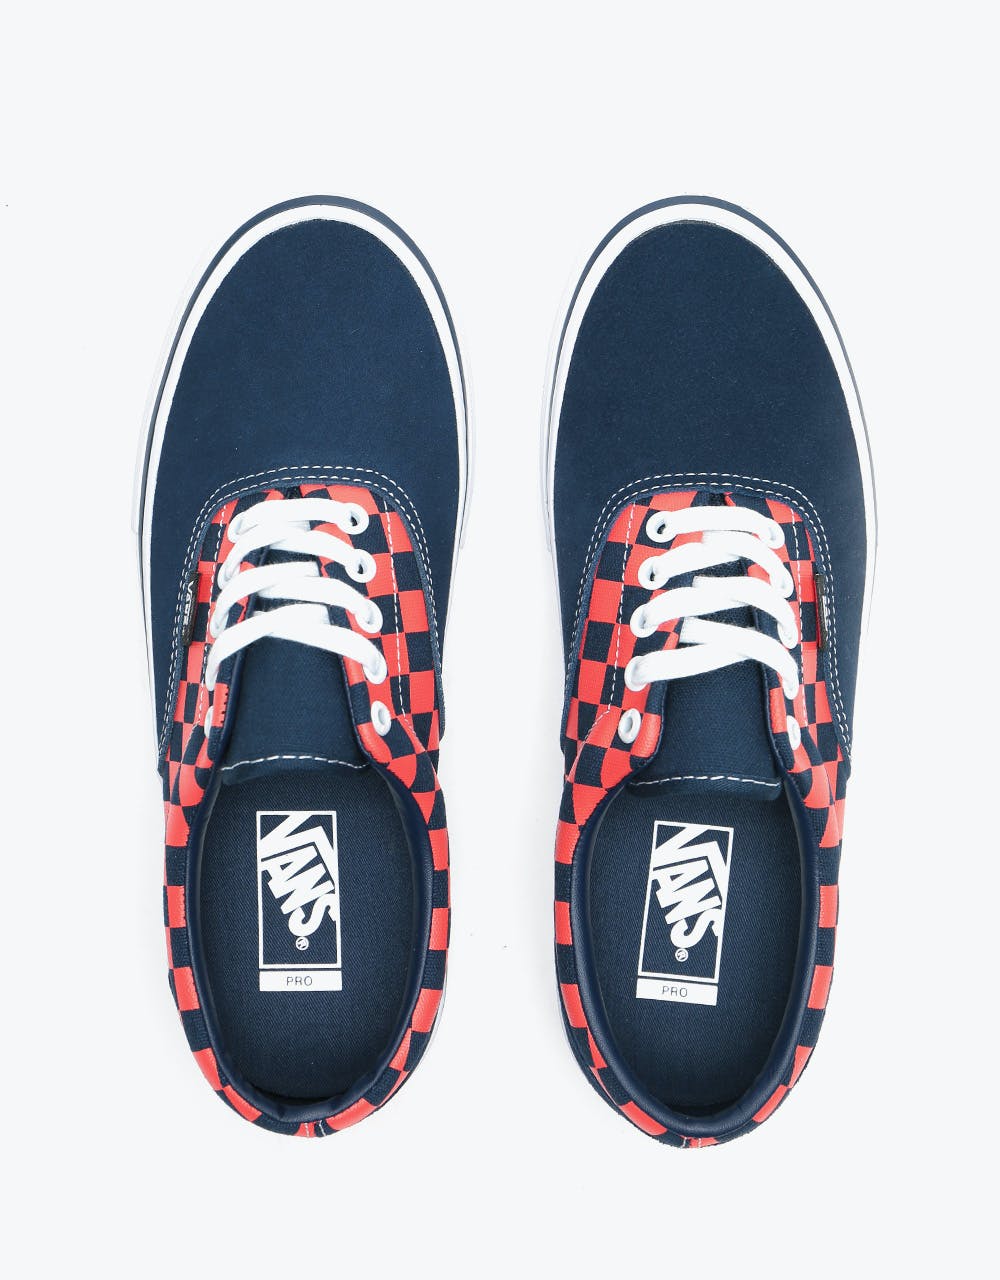 Vans Era Pro Skate Shoes - (Checkerboard) Navy/Orange